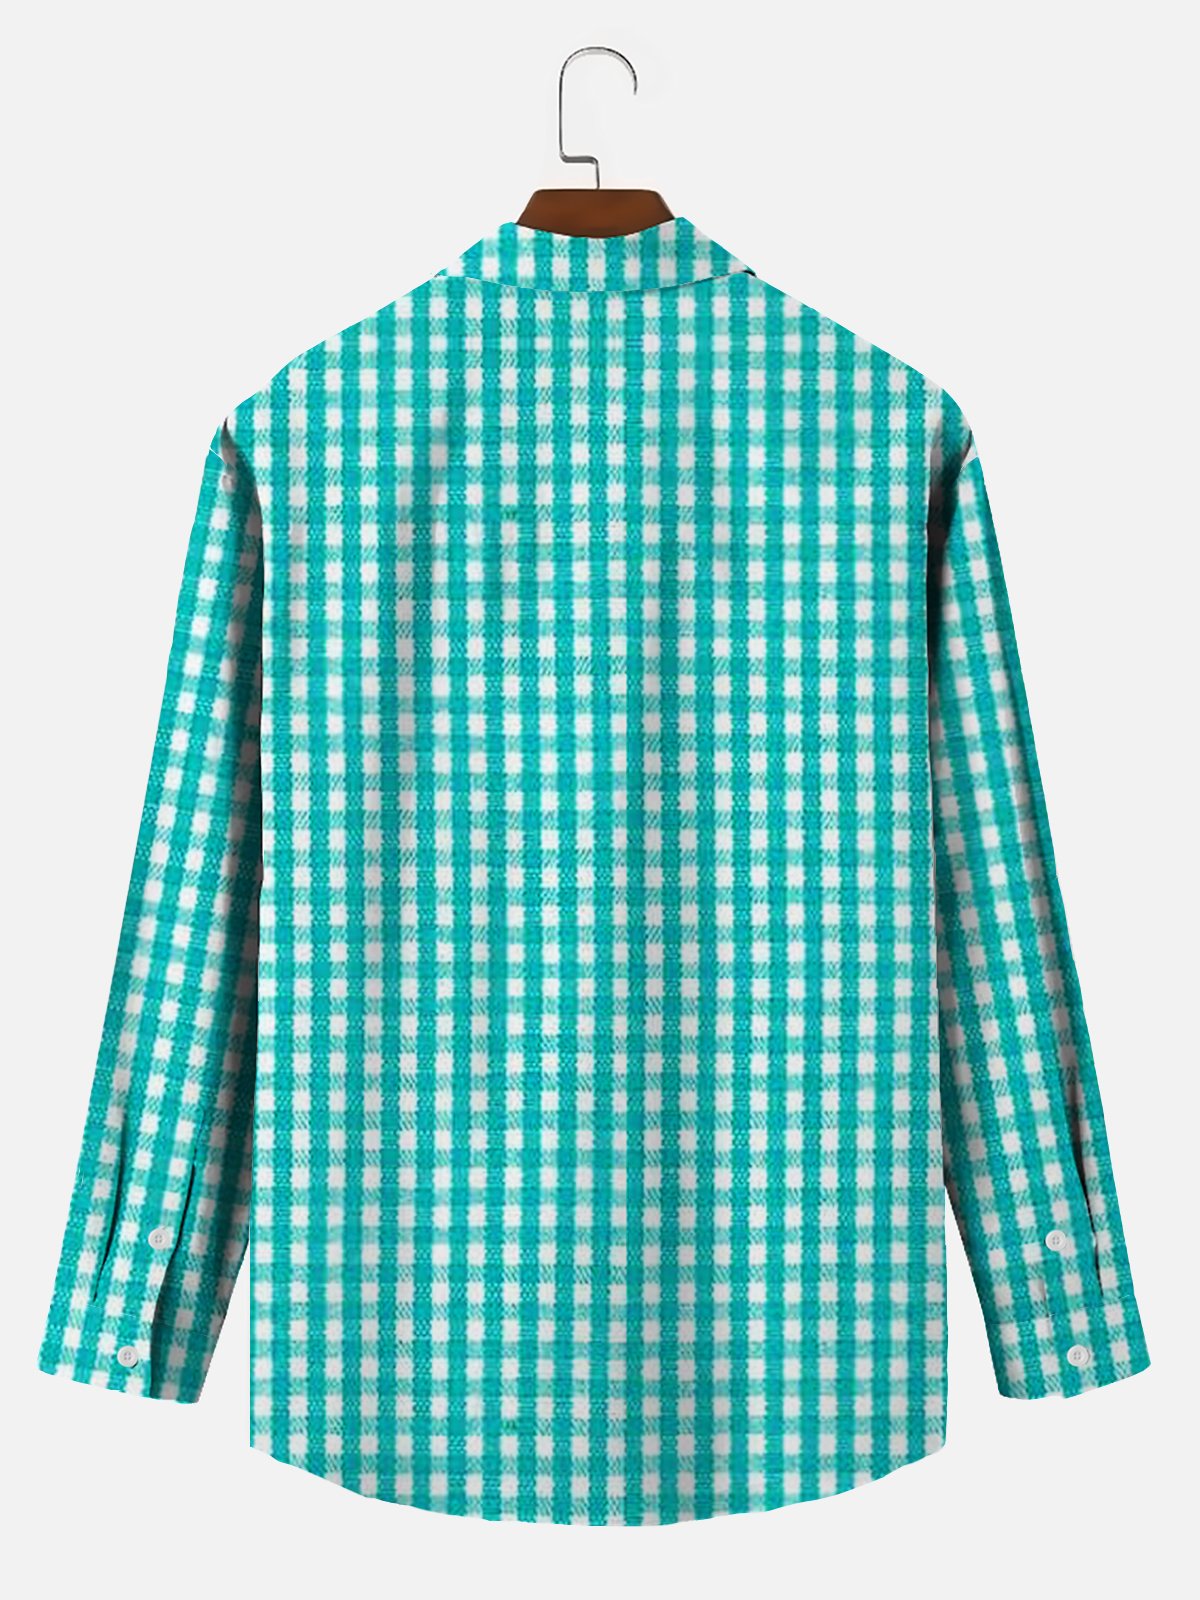 Royaura Basic Vintage Plaid Print Men's Button Pocket Shirt